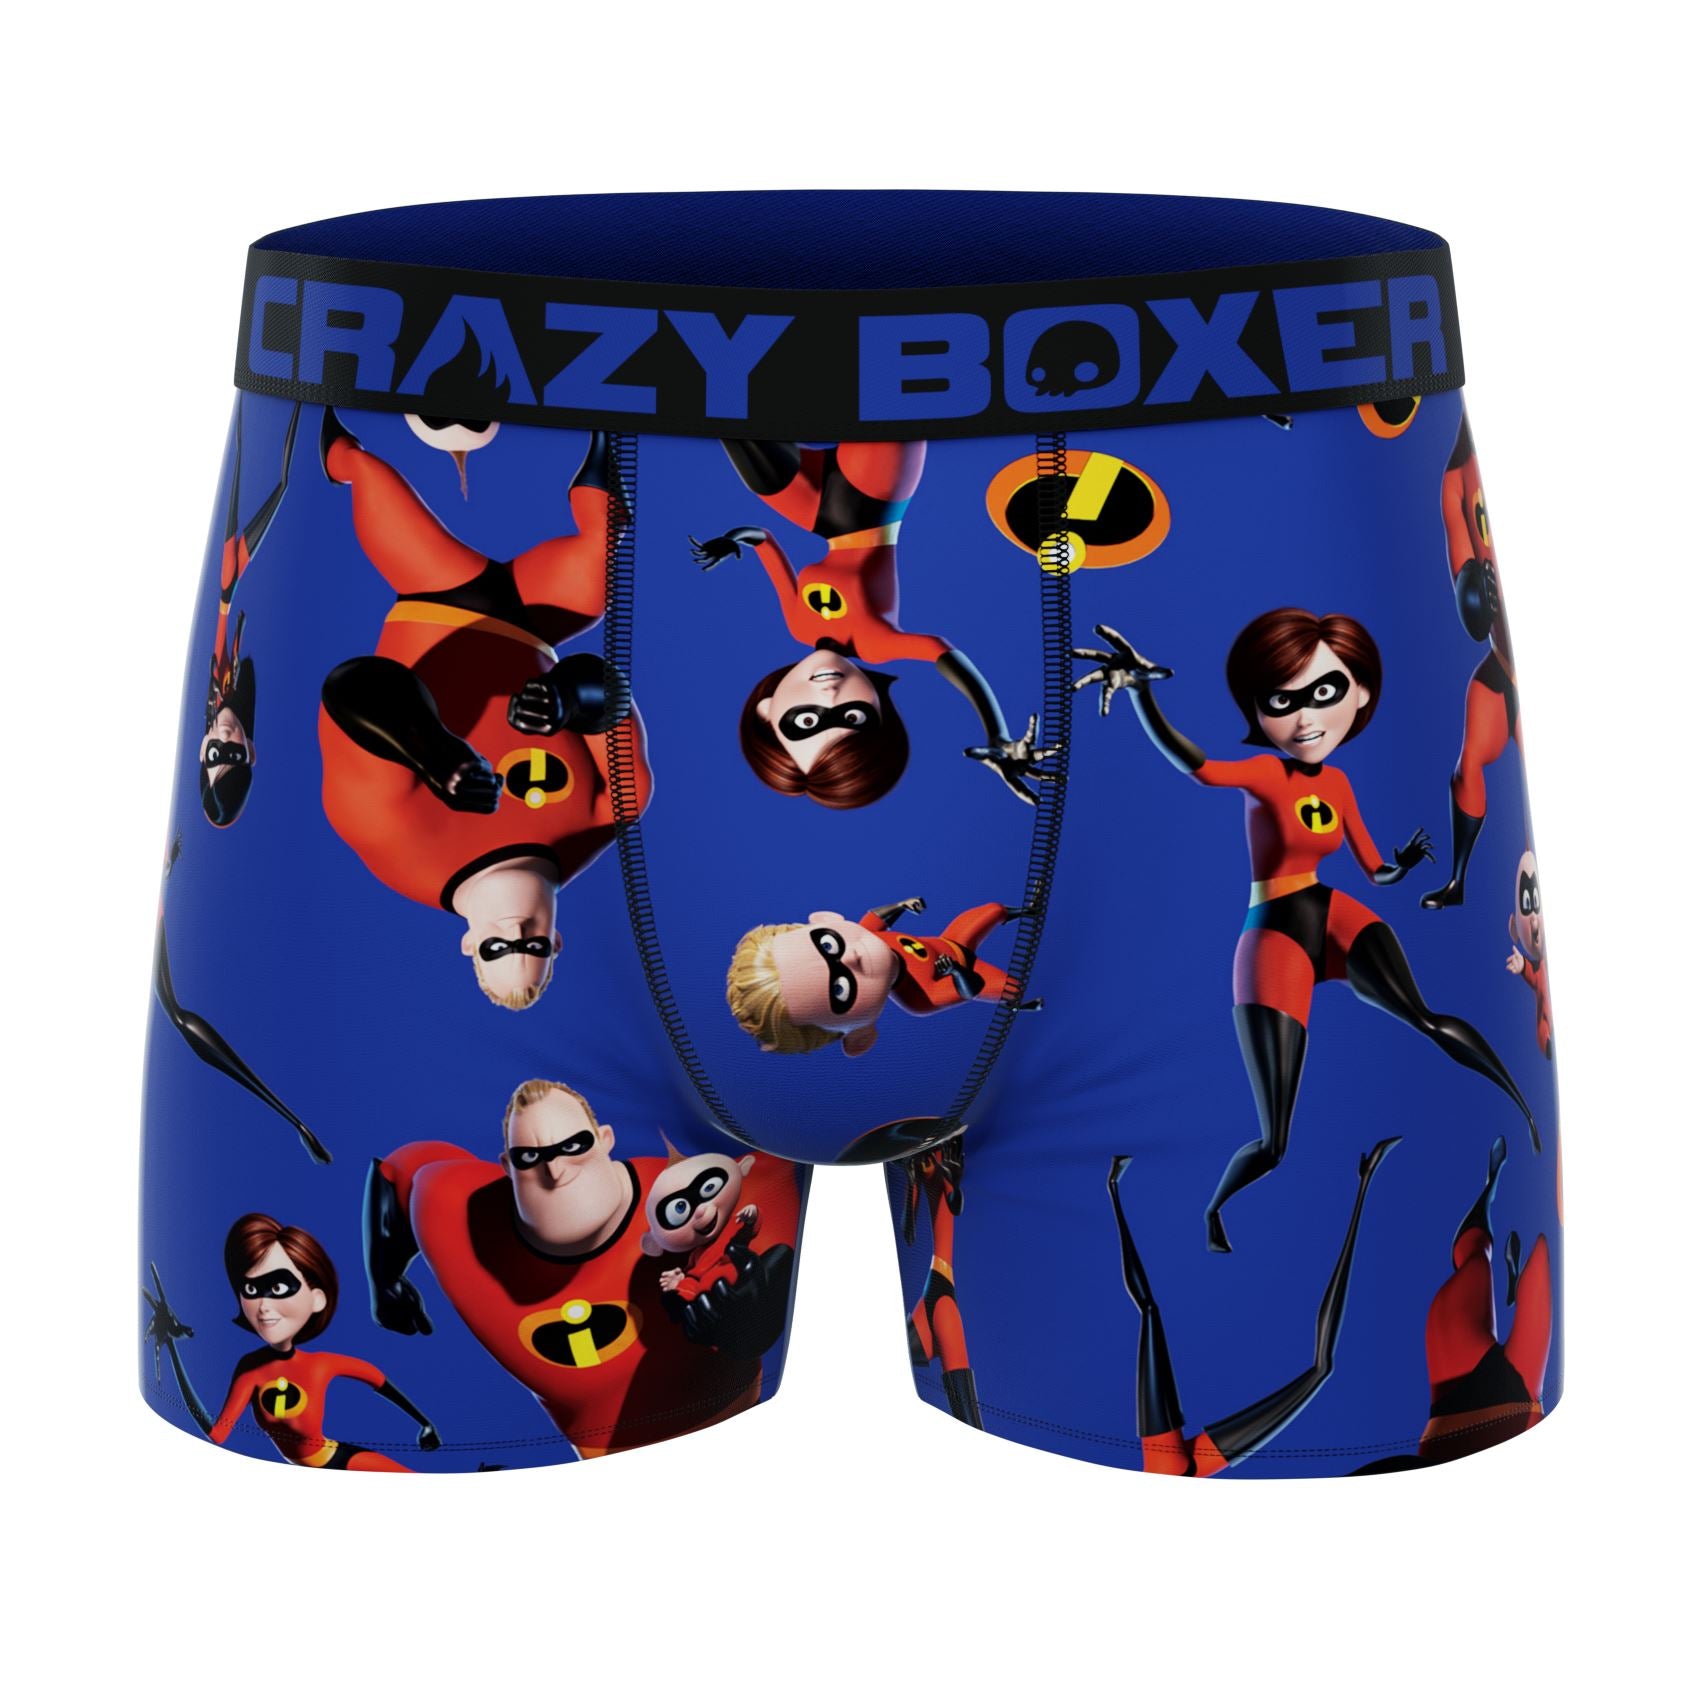 CRAZYBOXER The Incredibles Frozone Men's Boxer Briefs (Pack 2)